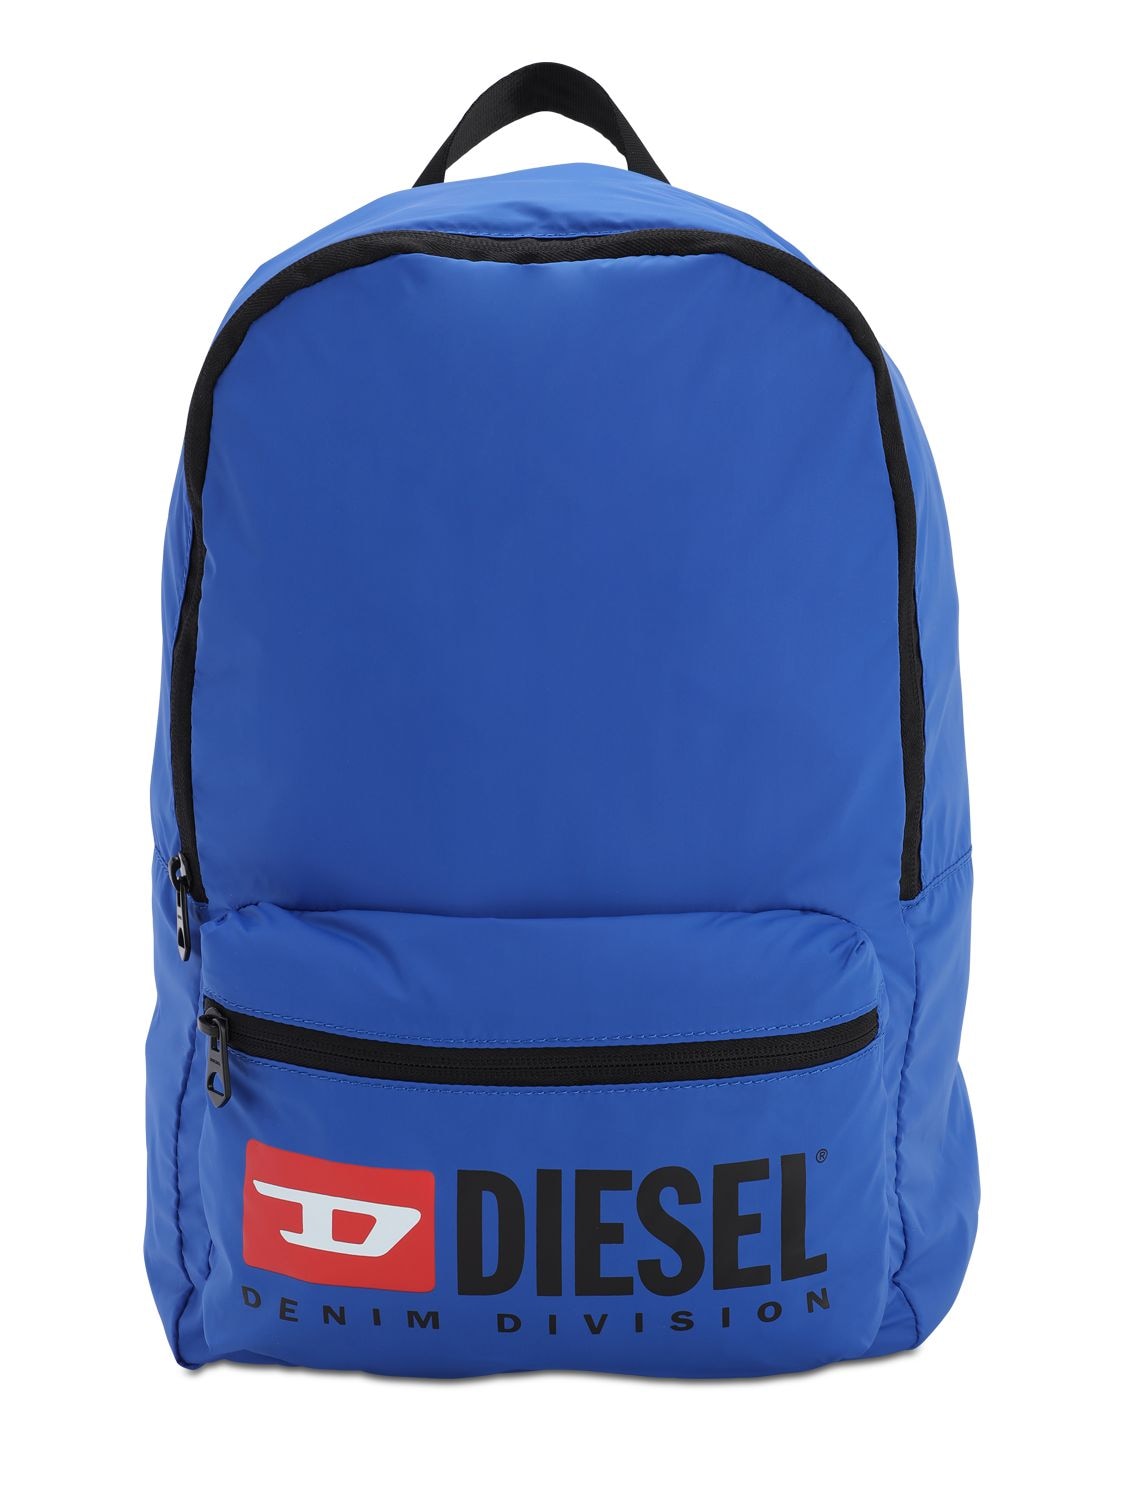 Diesel Kids' Logo Print Nylon Backpack In Royal Blue